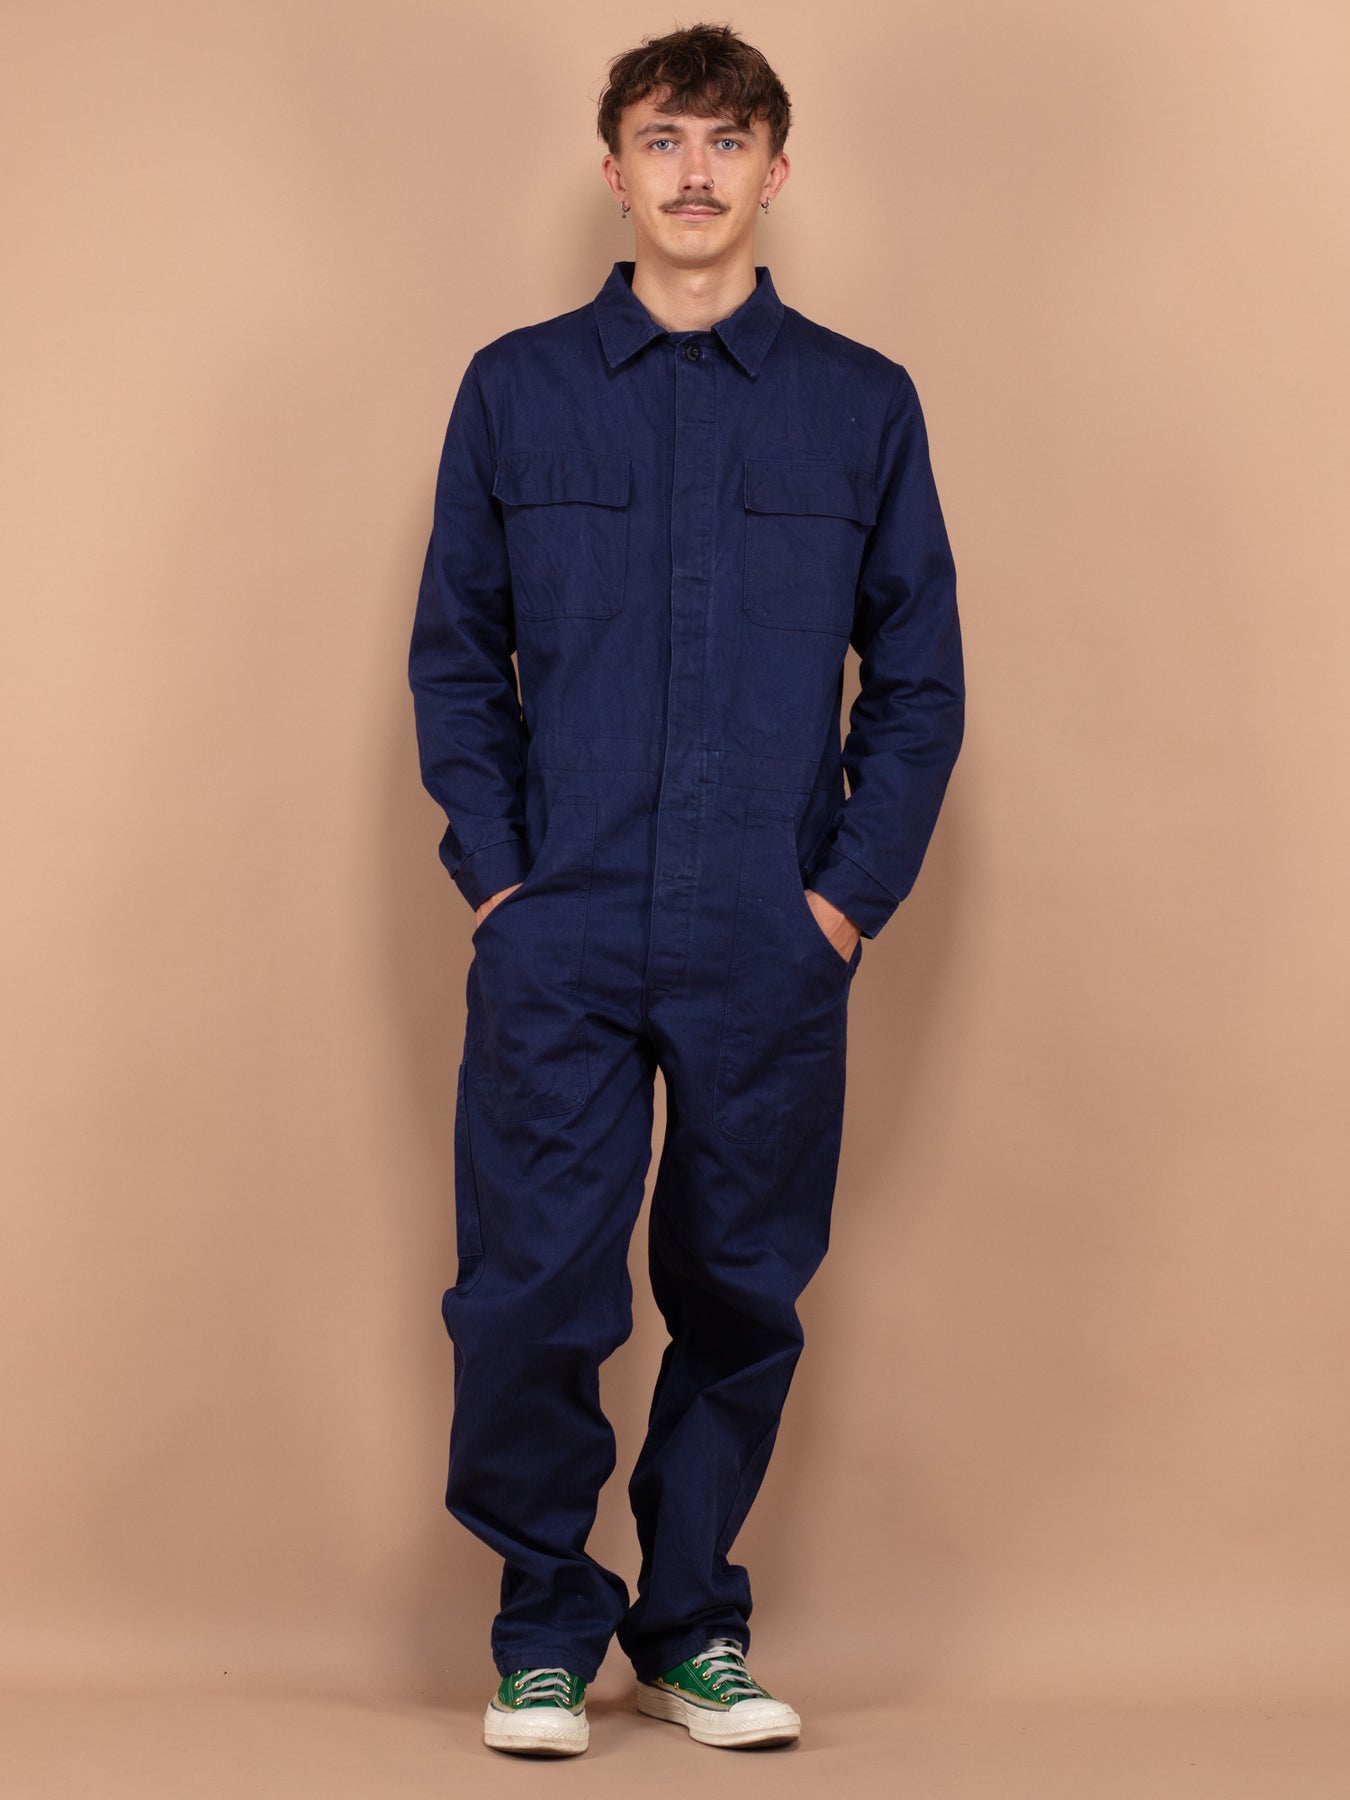 Mens Short Sleeve Work Jacket Tops Pocket Workers Shirt Mechanic Uniform  Costume